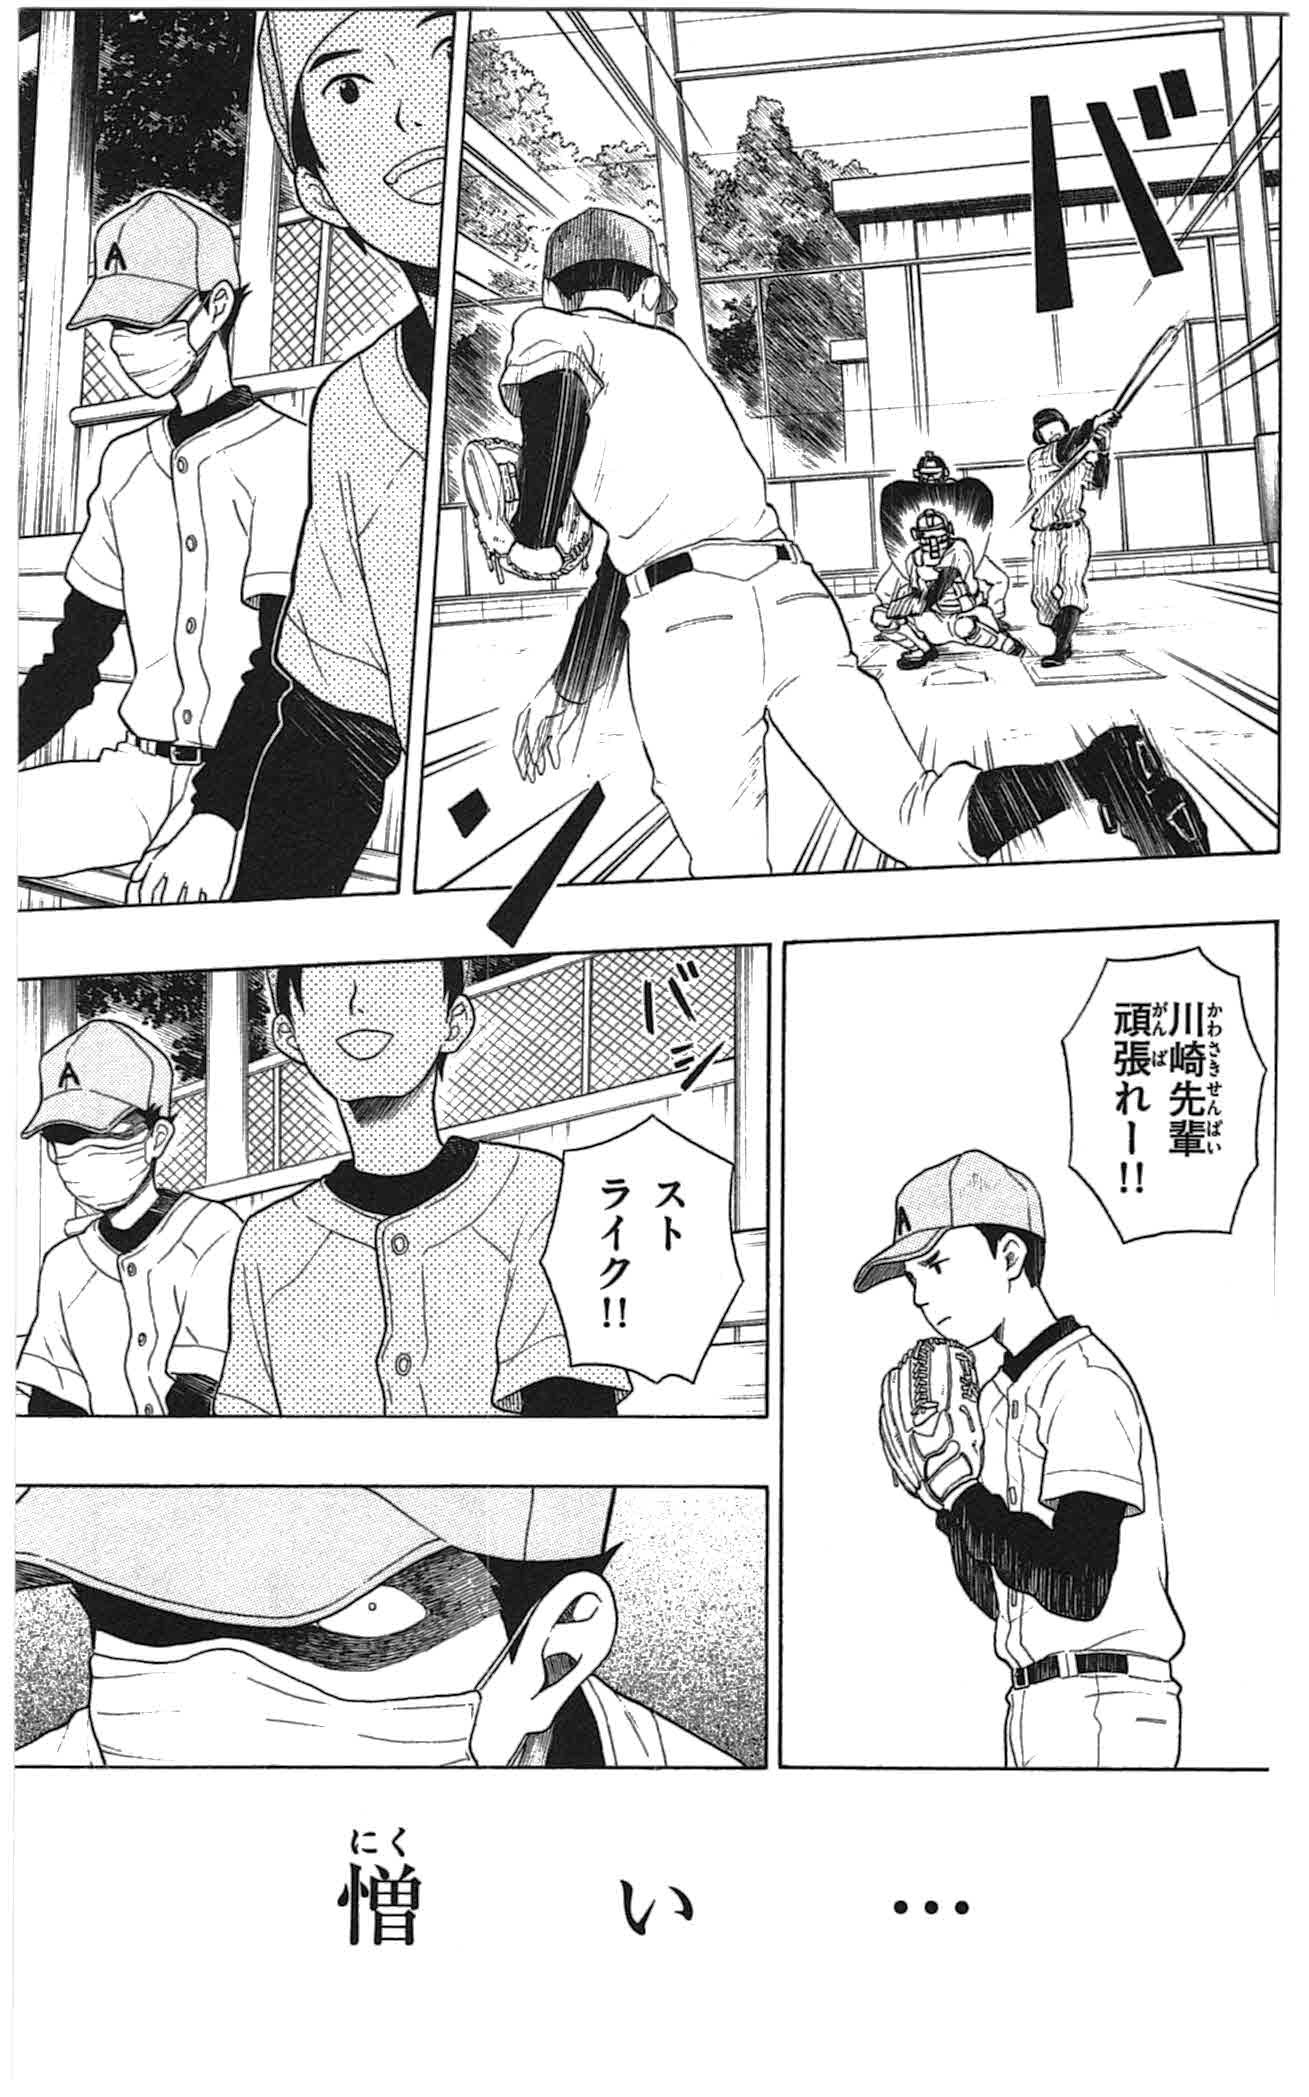 Yugami-kun ni wa Tomodachi ga Inai - Chapter 004 - Page 3